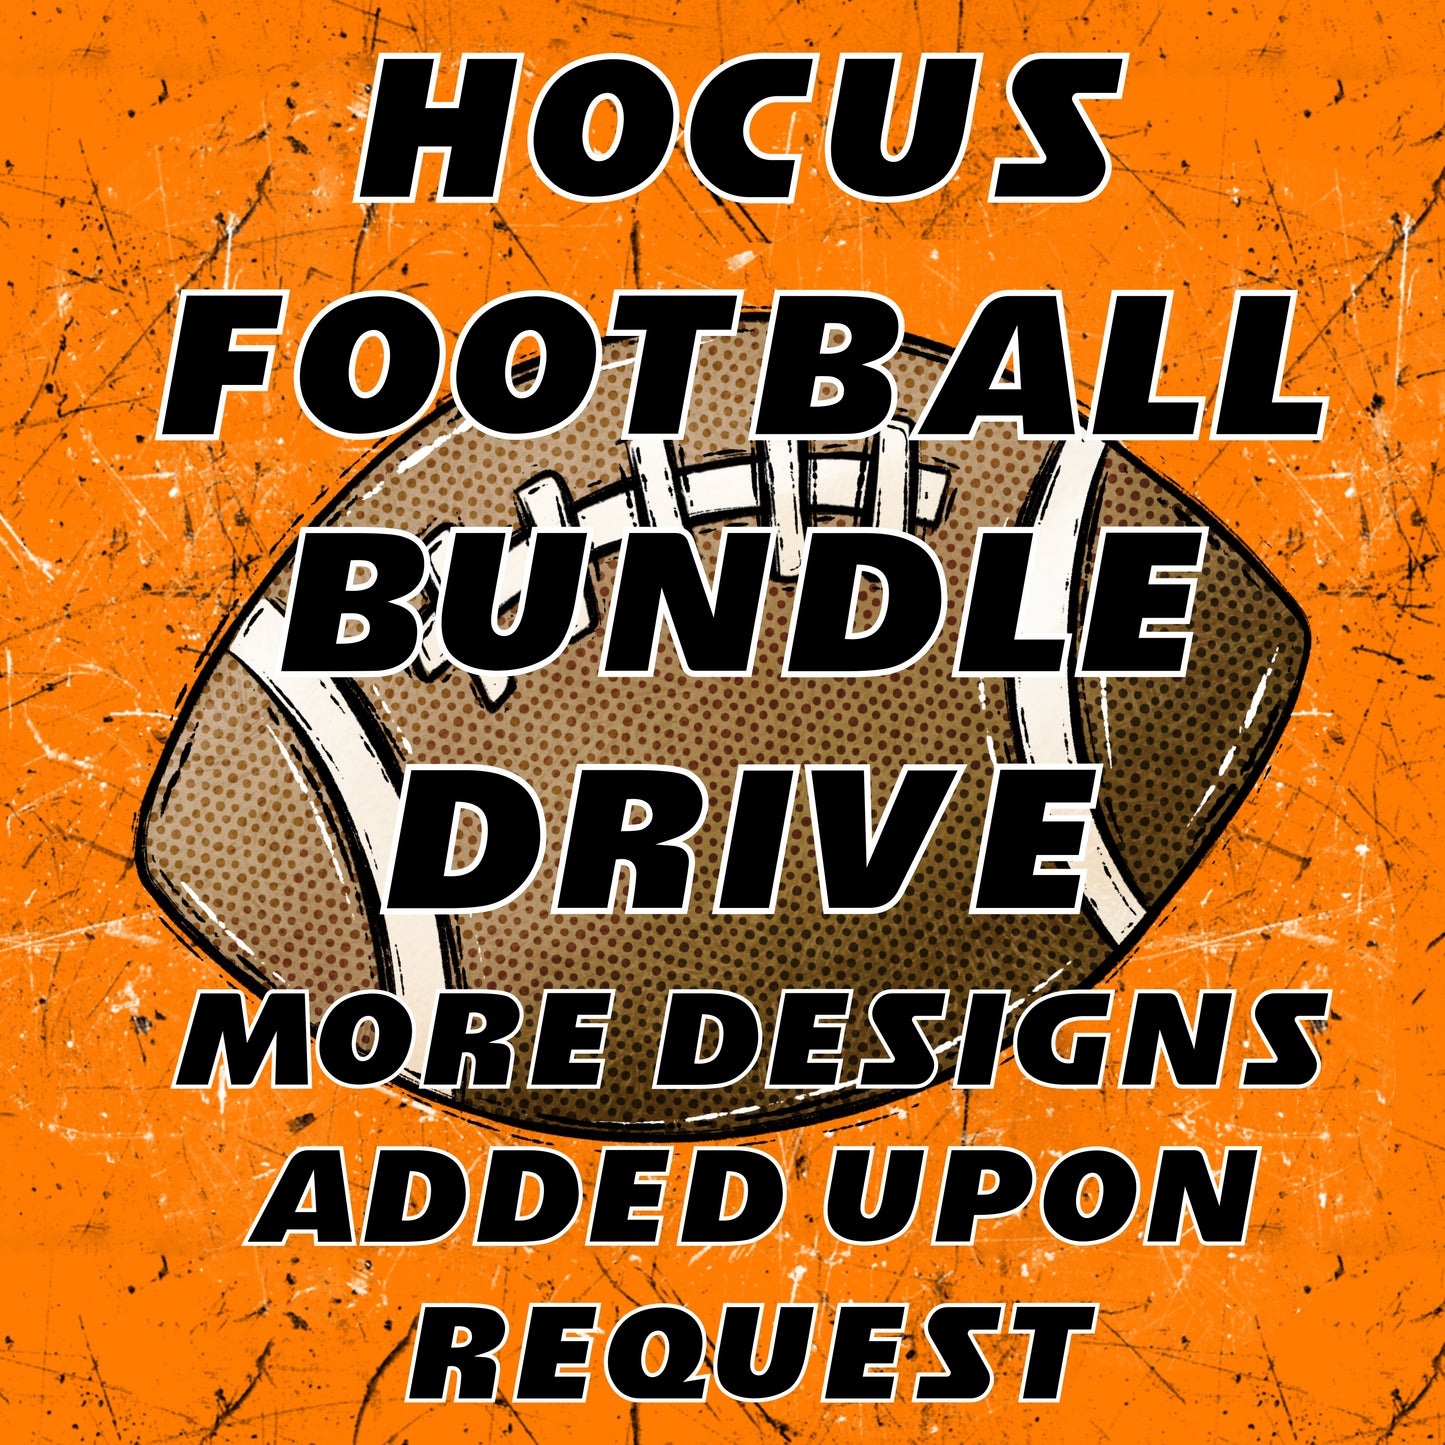 Hocus football bundle